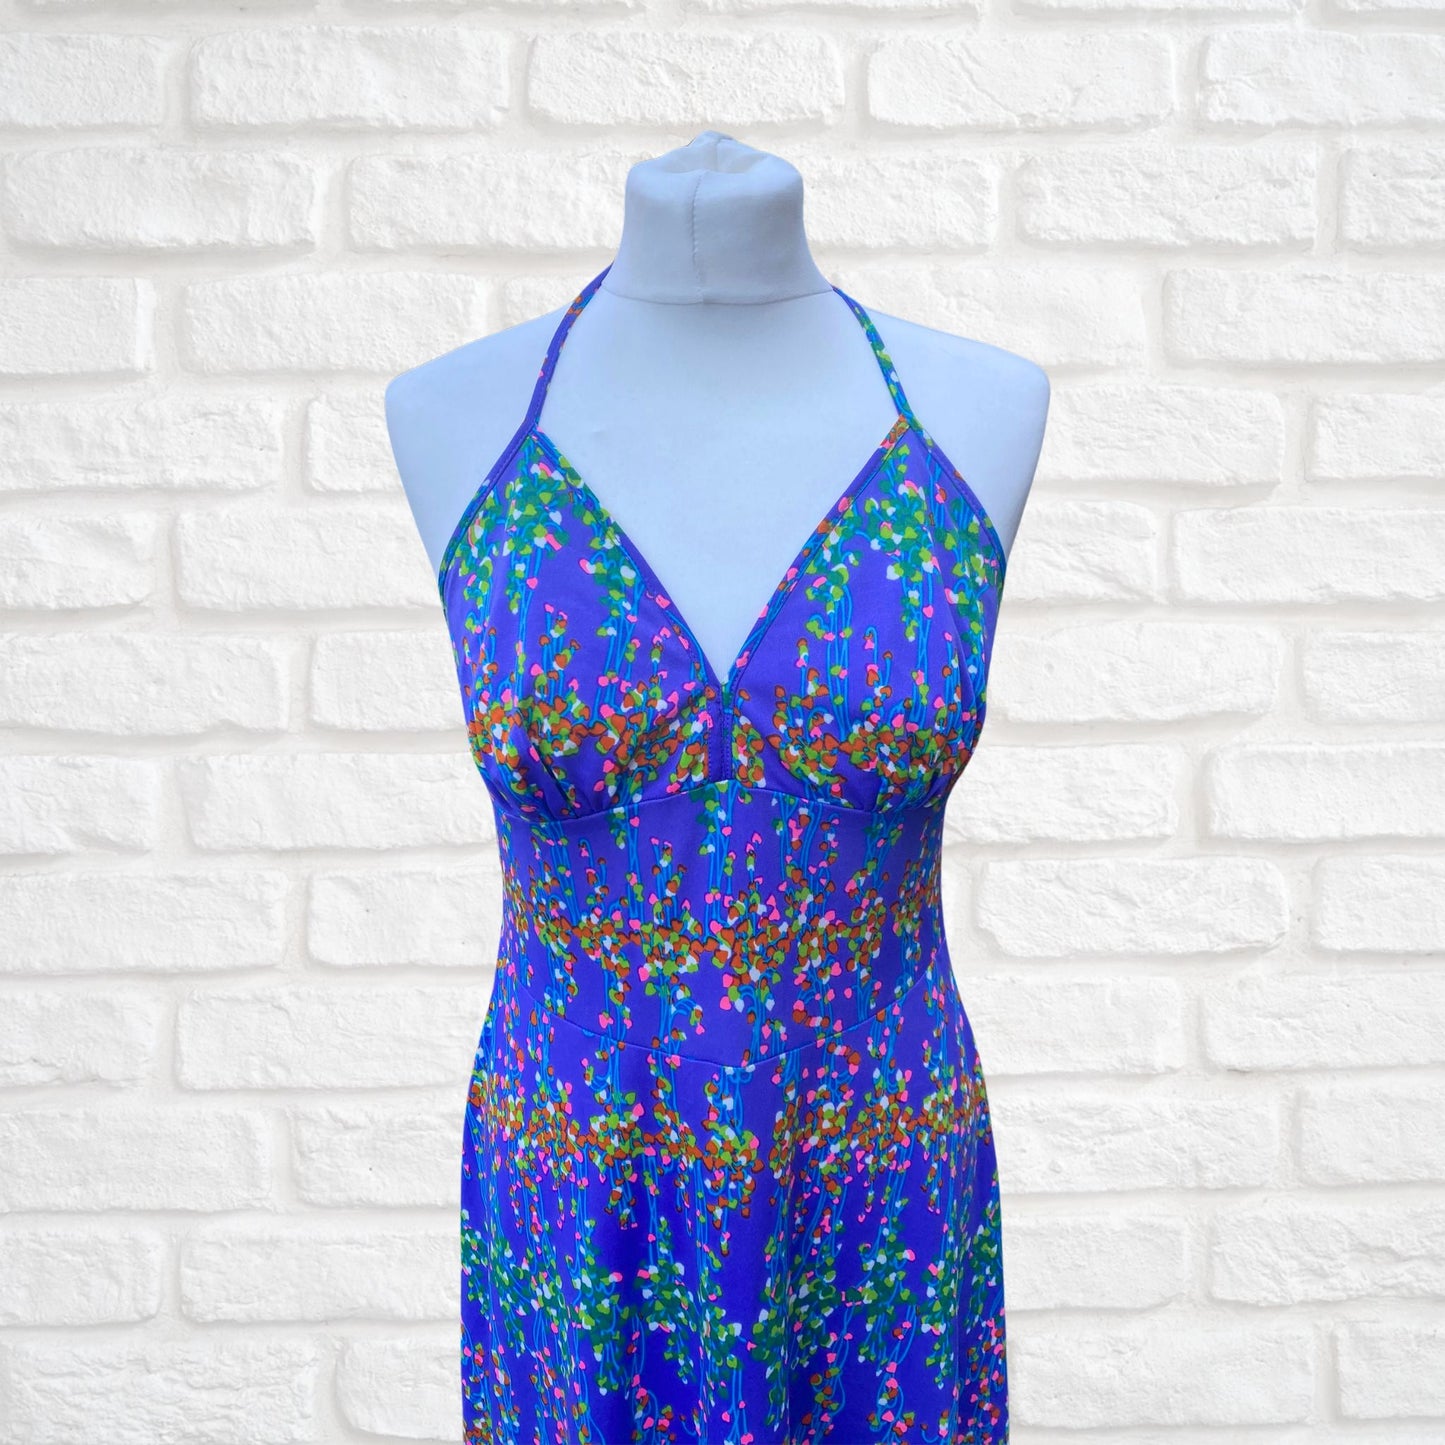 70s rainbow abstract print halter neck dress. Approx U.K. size 10-12